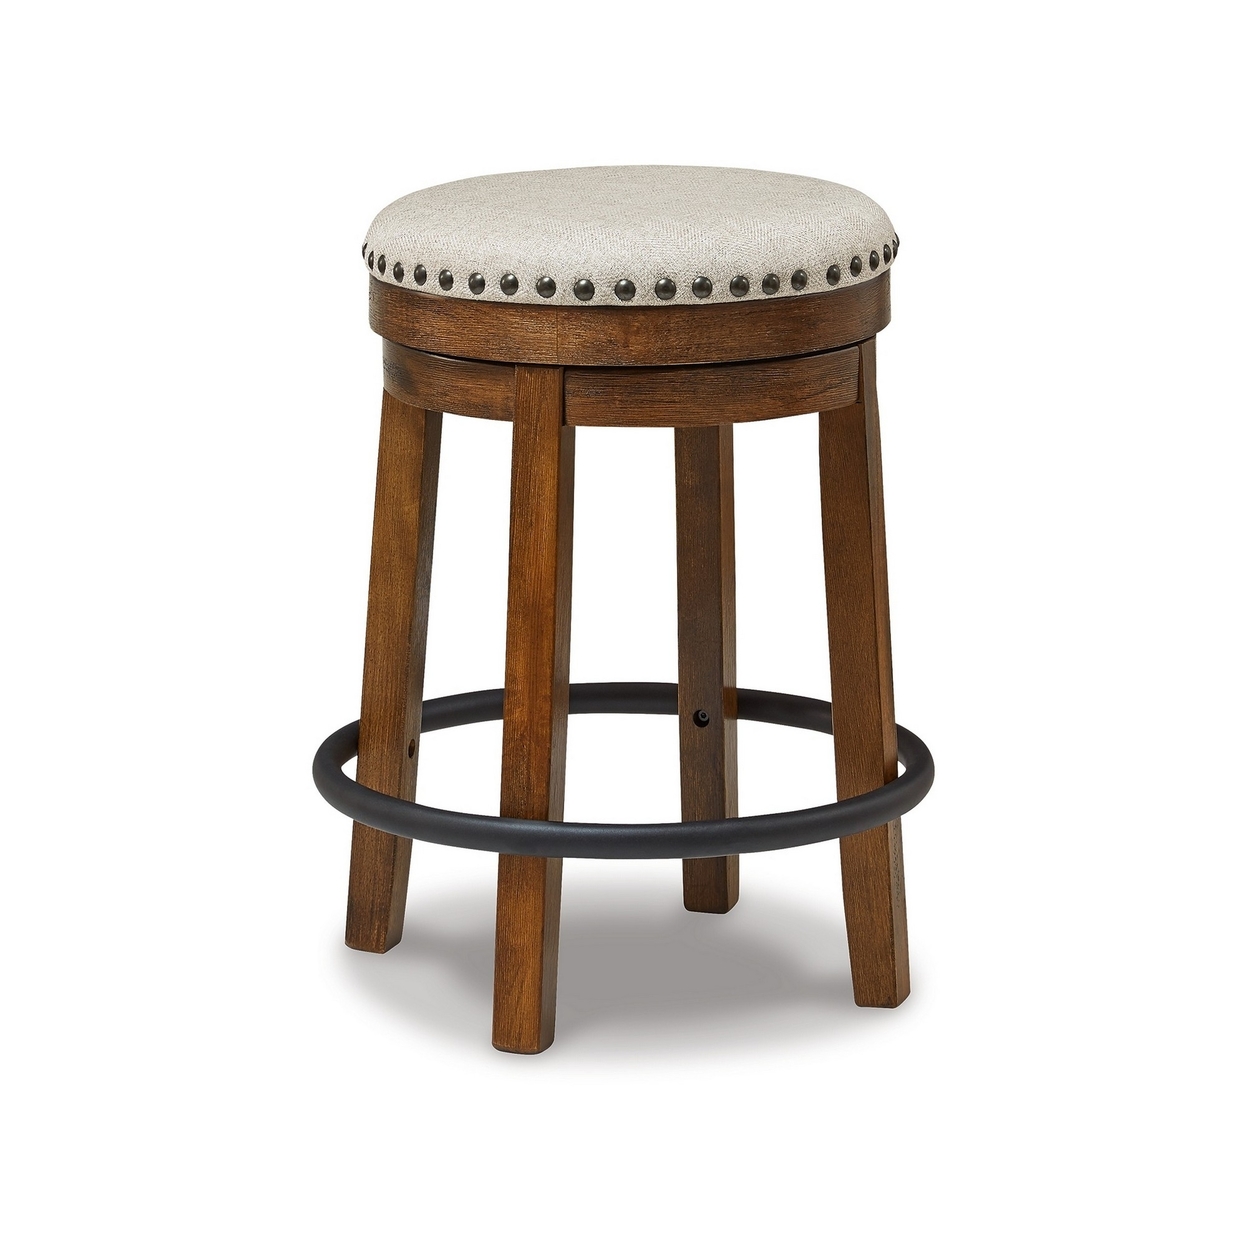 Zane 24 Inch Backless Swivel Counter Stool, Round Beige Seat, Brown Wood- Saltoro Sherpi